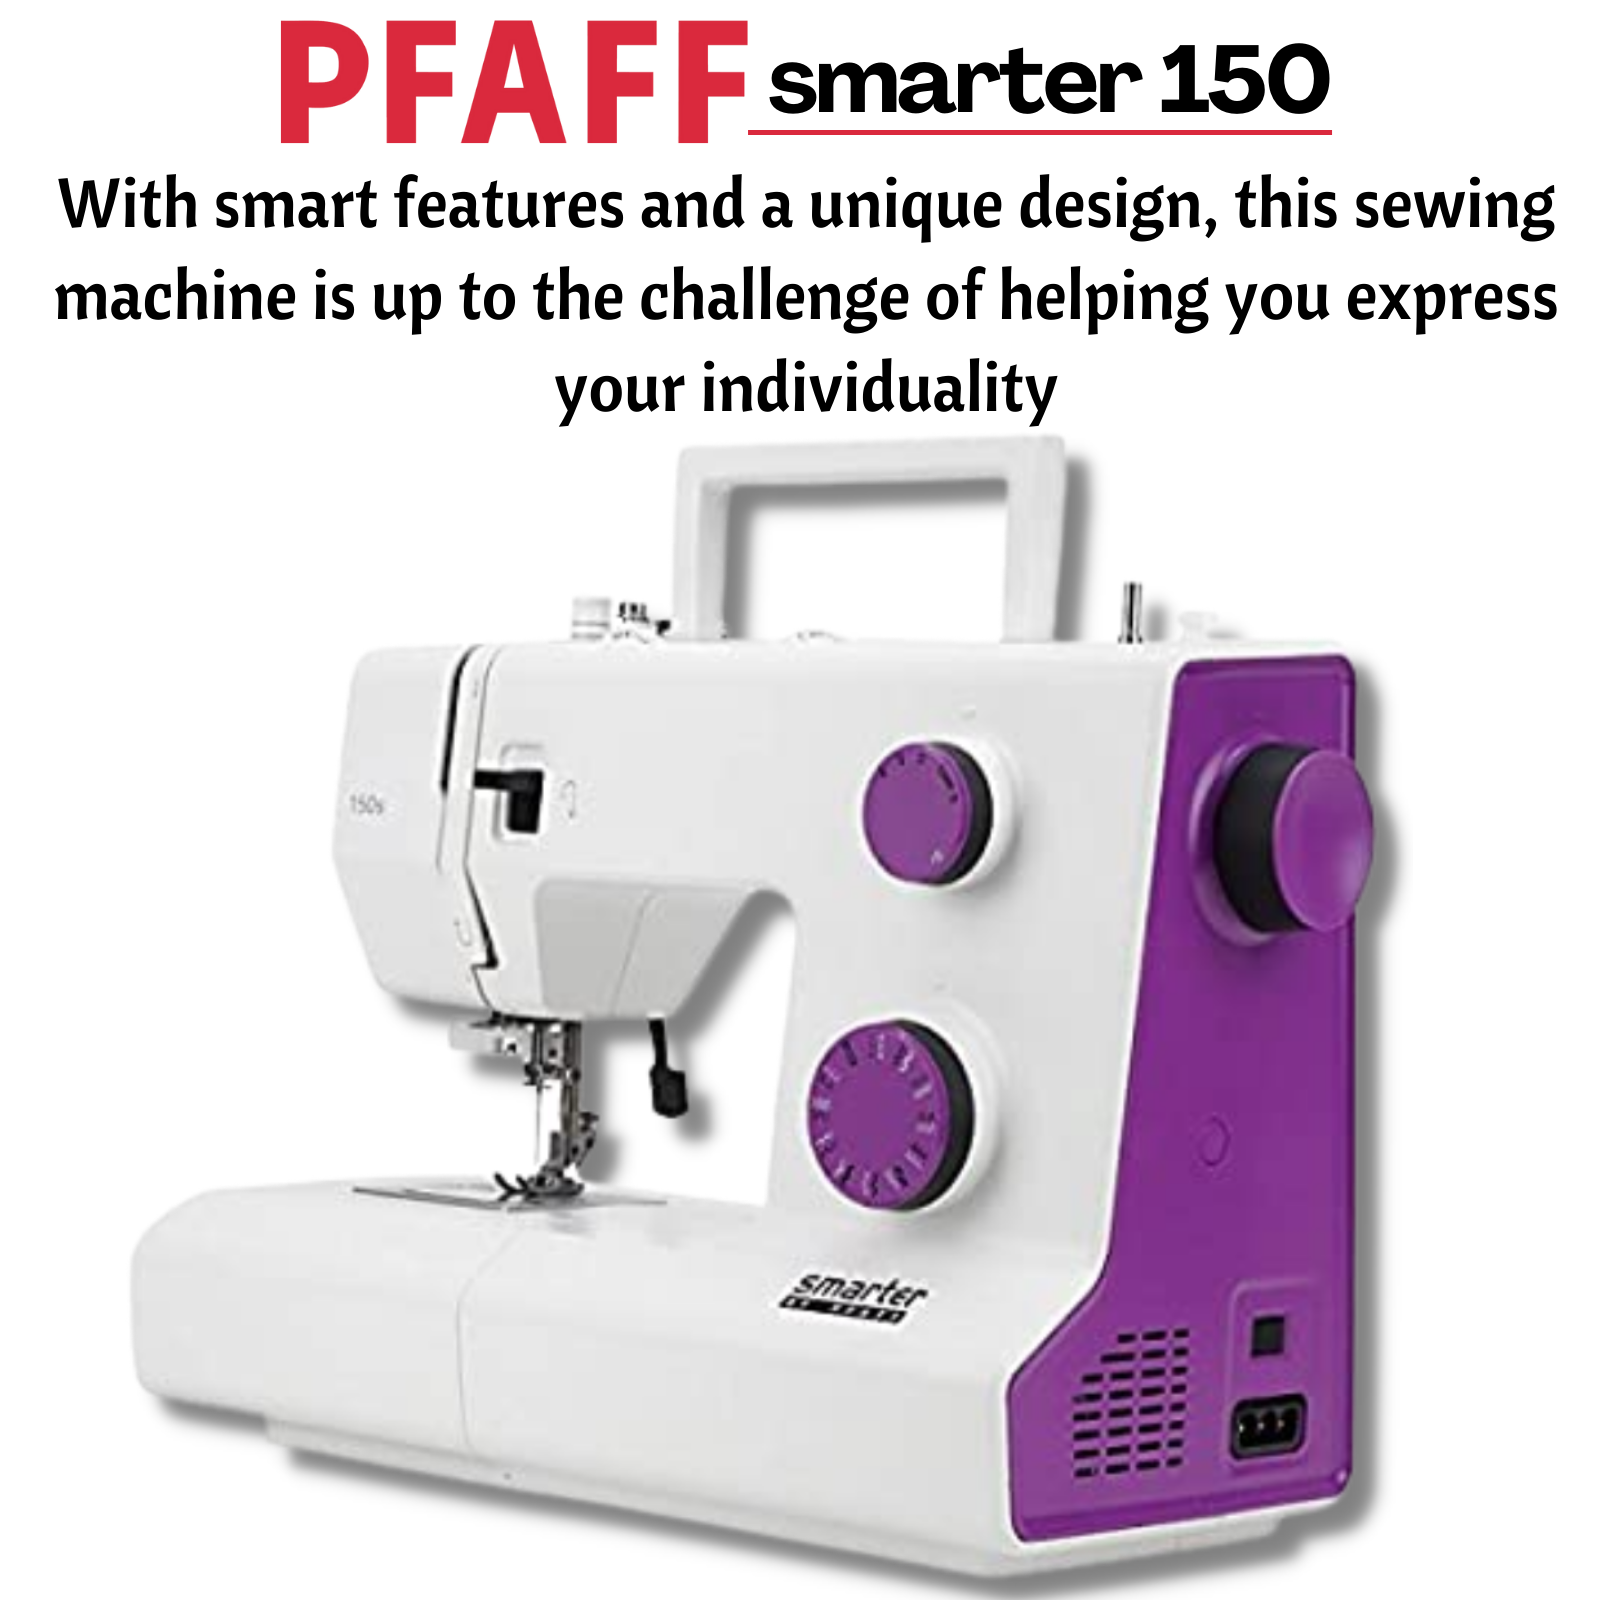 Pfaff Smarter 150 Sewing Machine, 23 Stitches, Buttonhole, Free-Arm